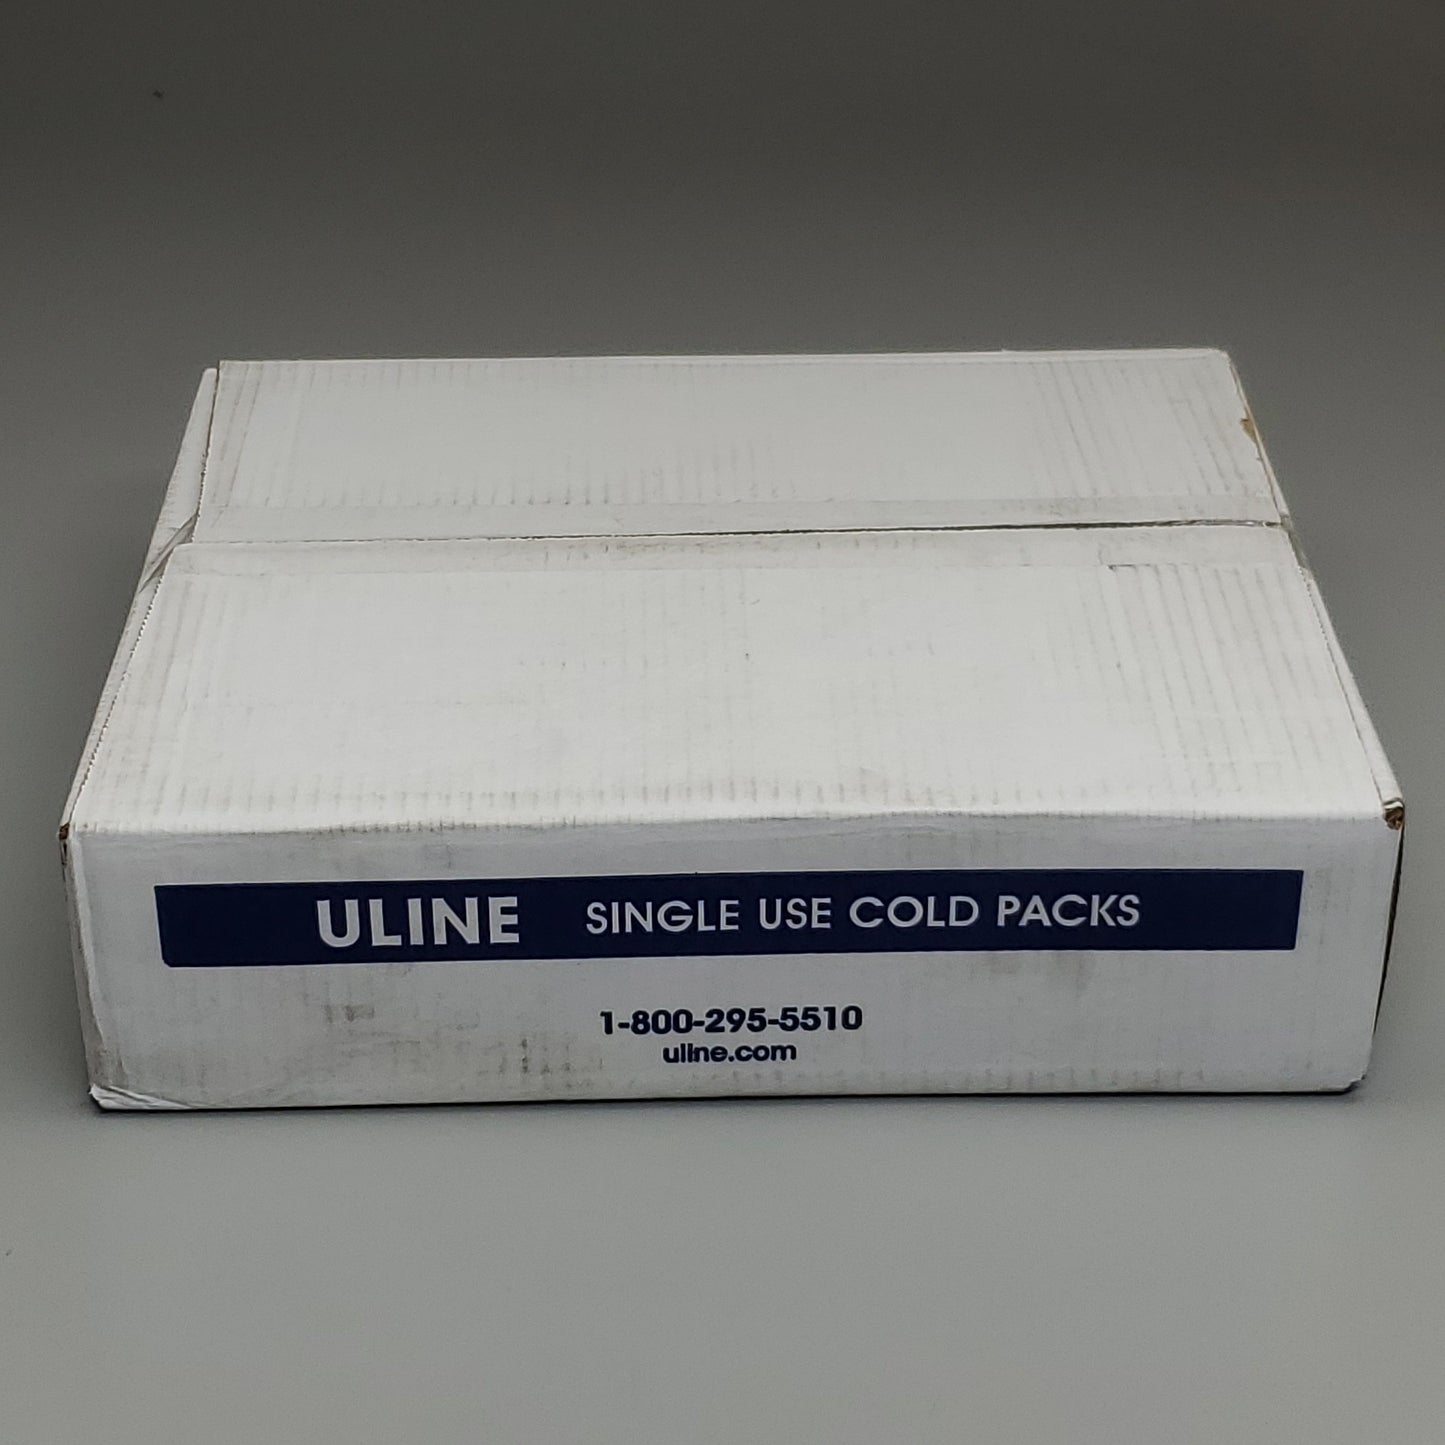 ZA@ ULINE Case of 9 Single Use Cold Packs 32 oz, S-20426 (New) J